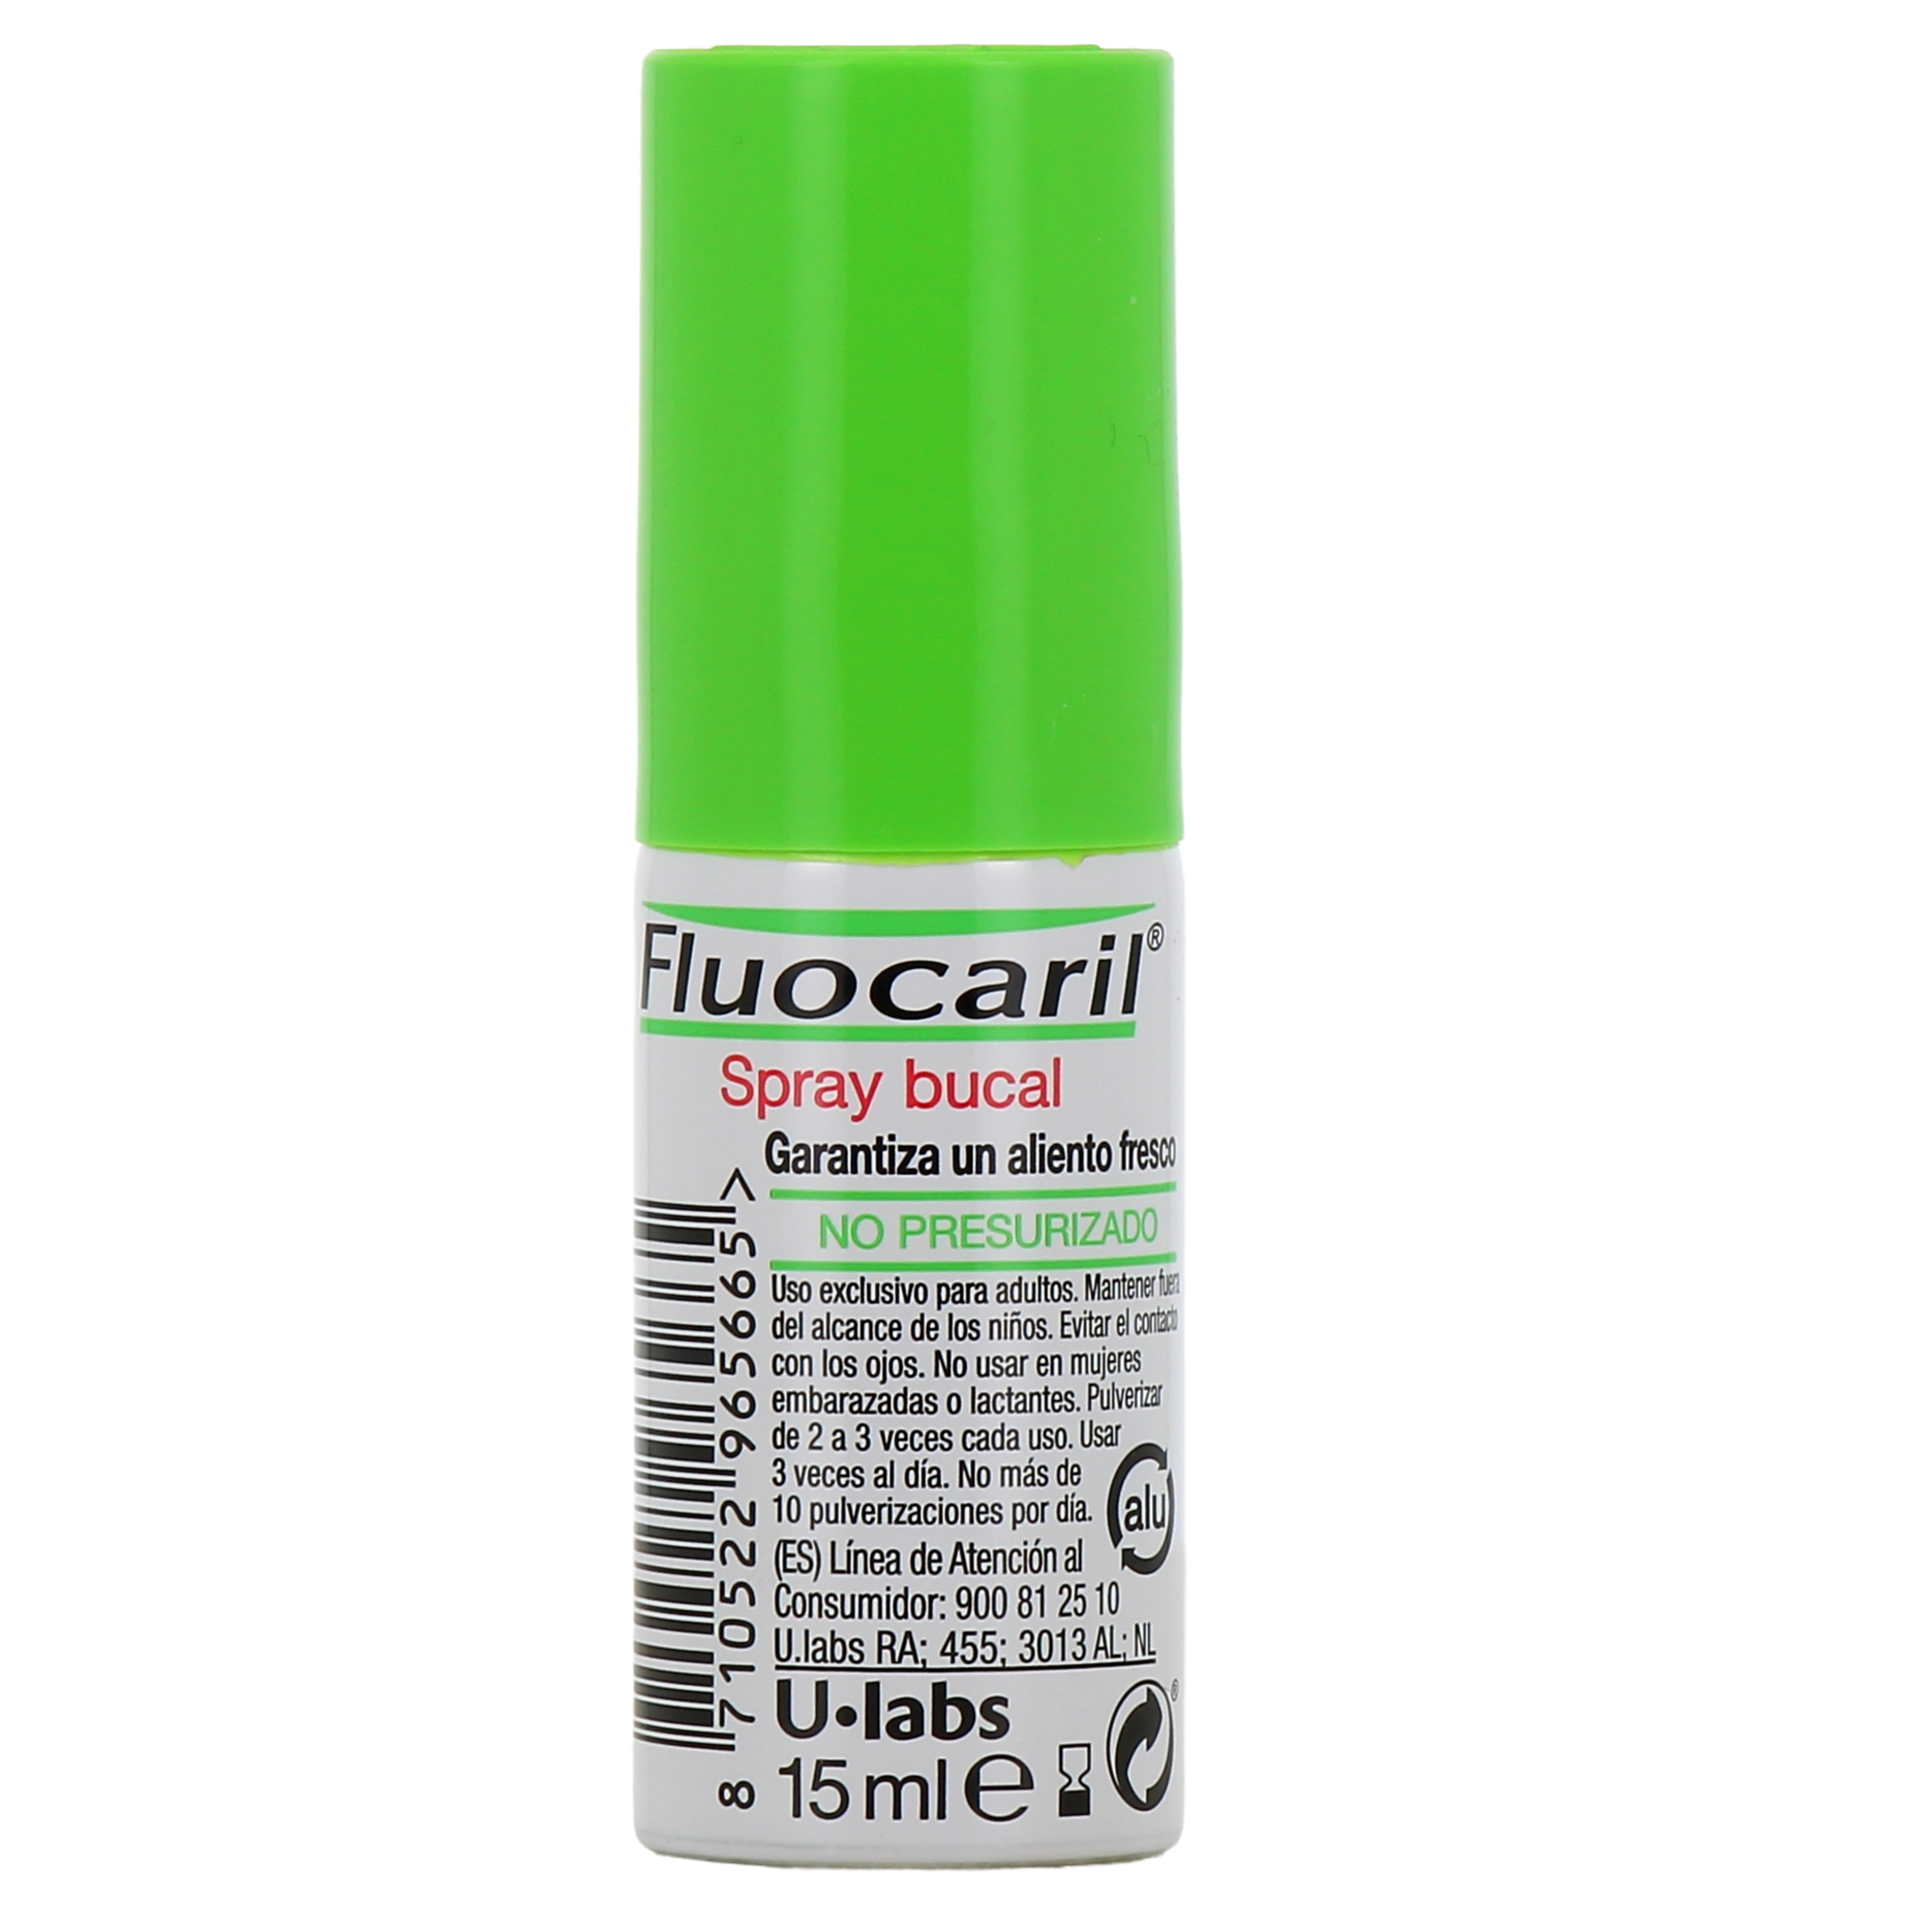 Spray buccal haleine fraîche Fluocaril